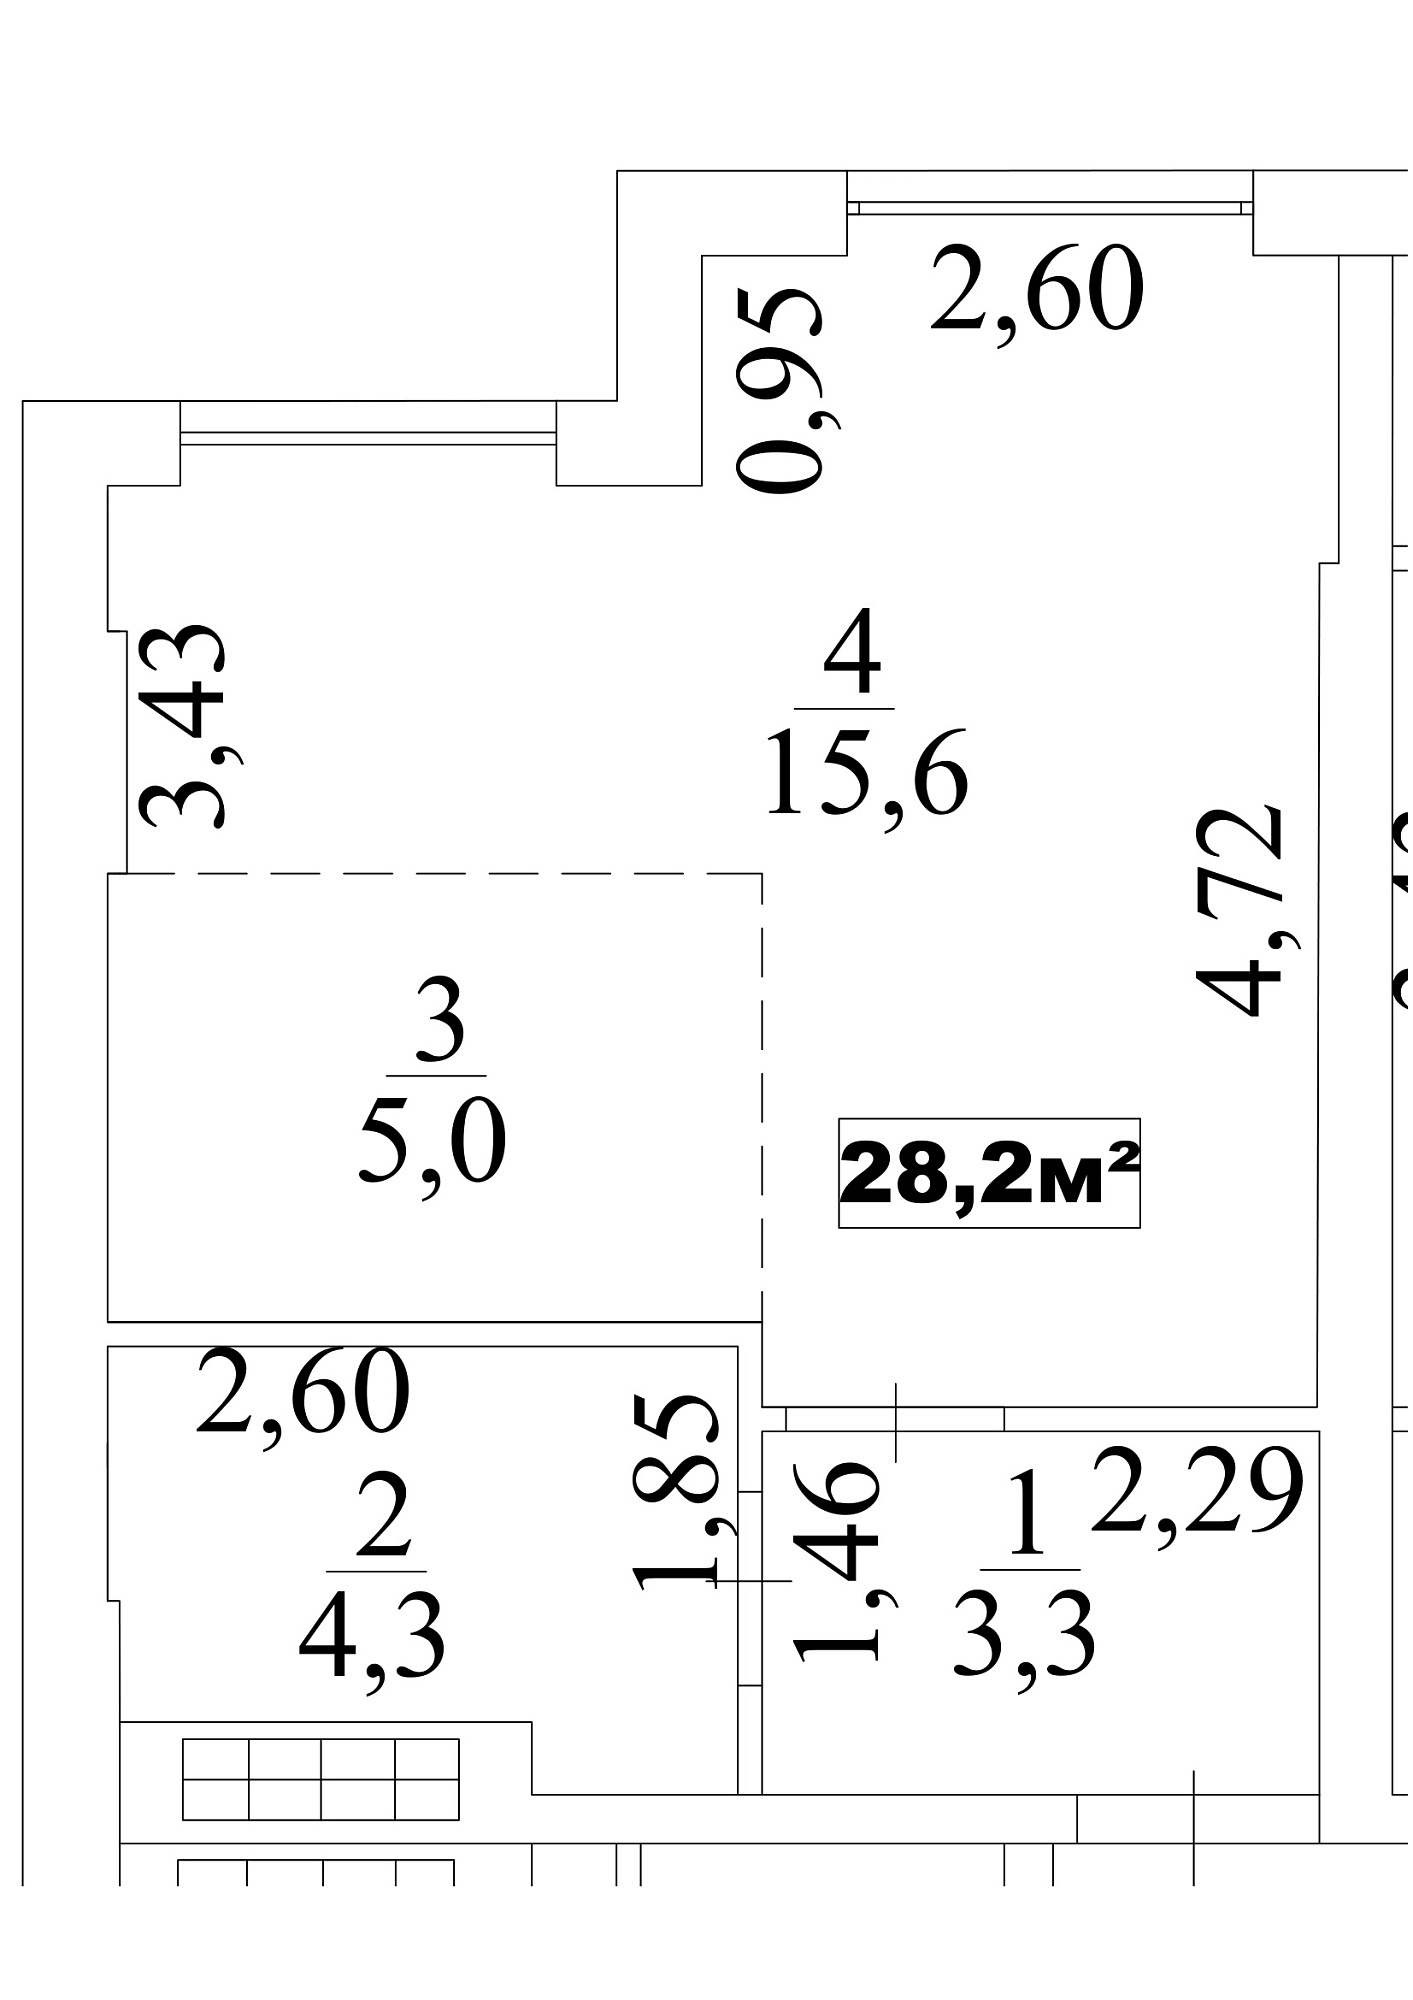 Planning Smart flats area 28.2m2, AB-10-10/0084б.